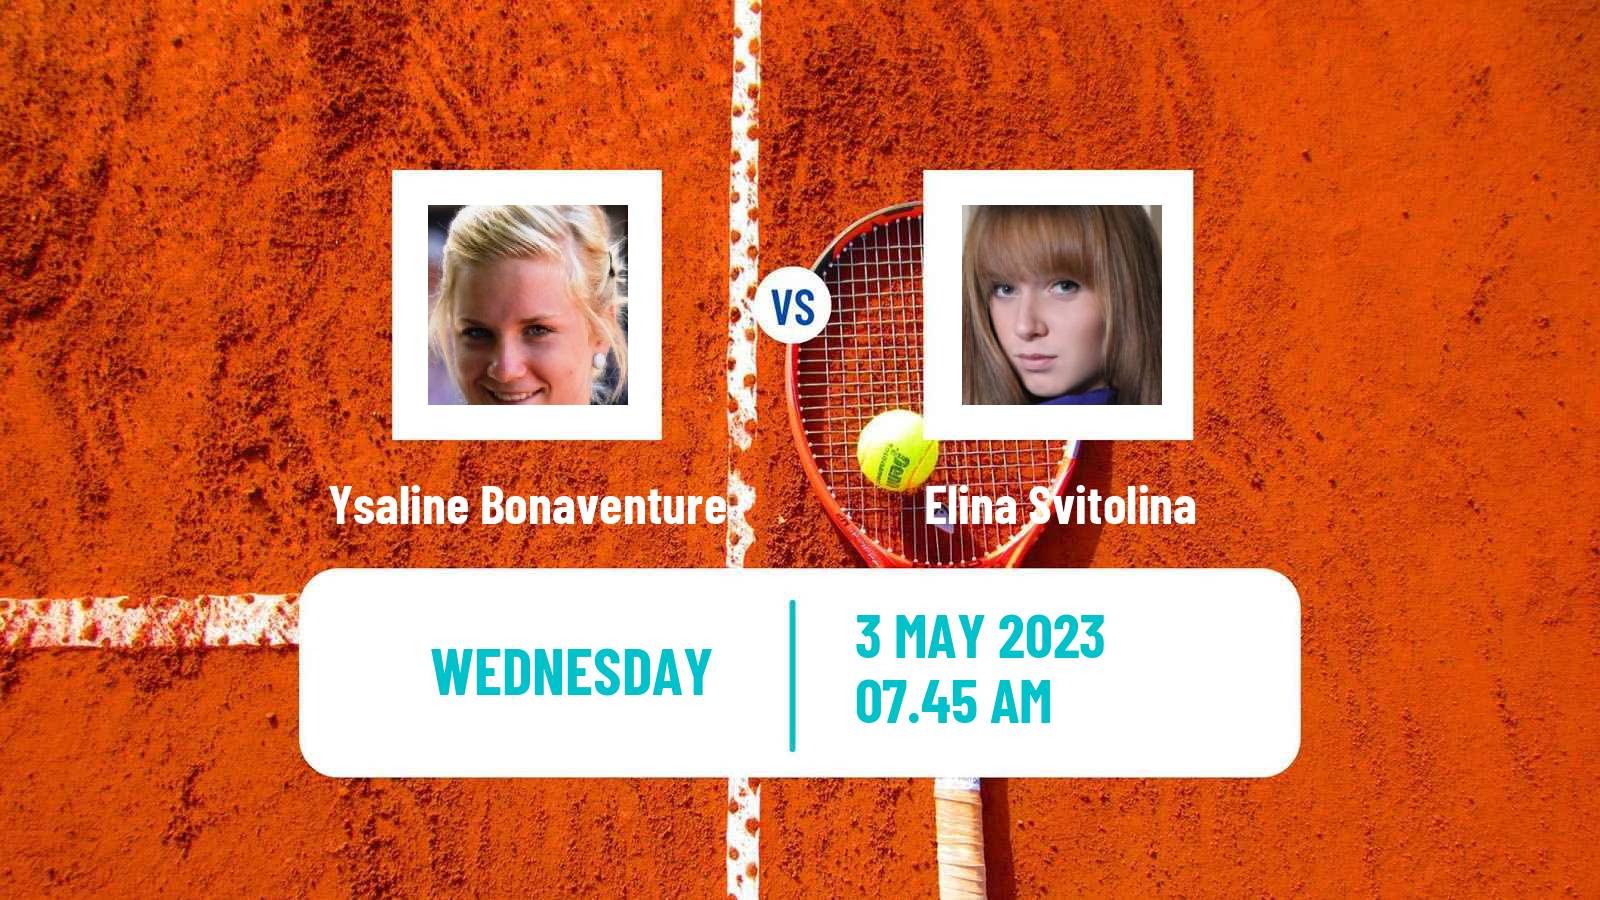 Tennis ATP Challenger Ysaline Bonaventure - Elina Svitolina